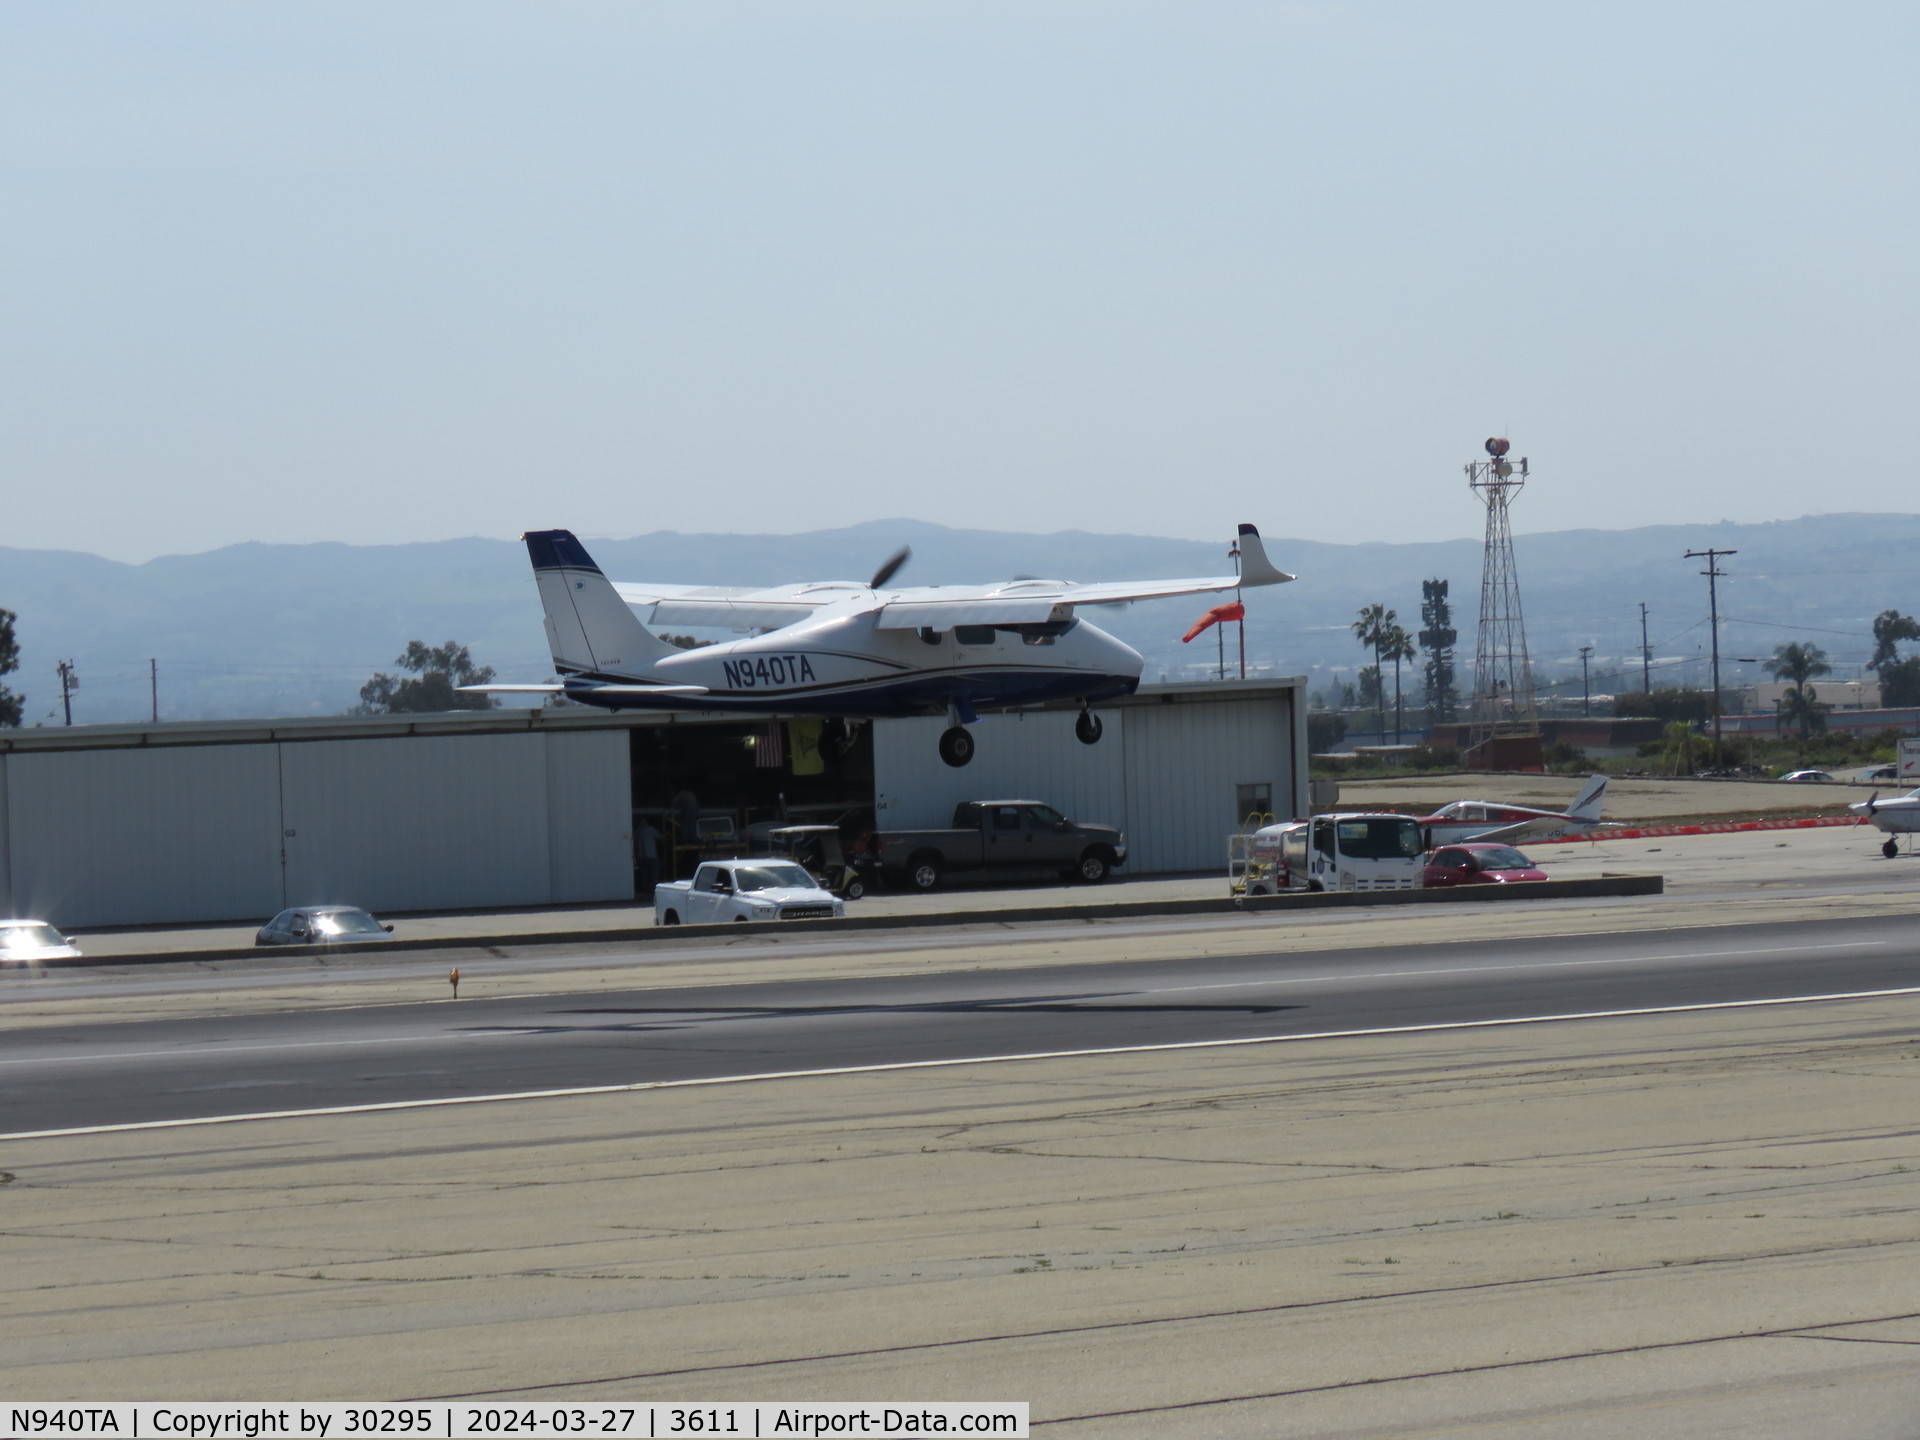 N940TA, 2014 Tecnam P-2006T C/N 140/US, Over the runway